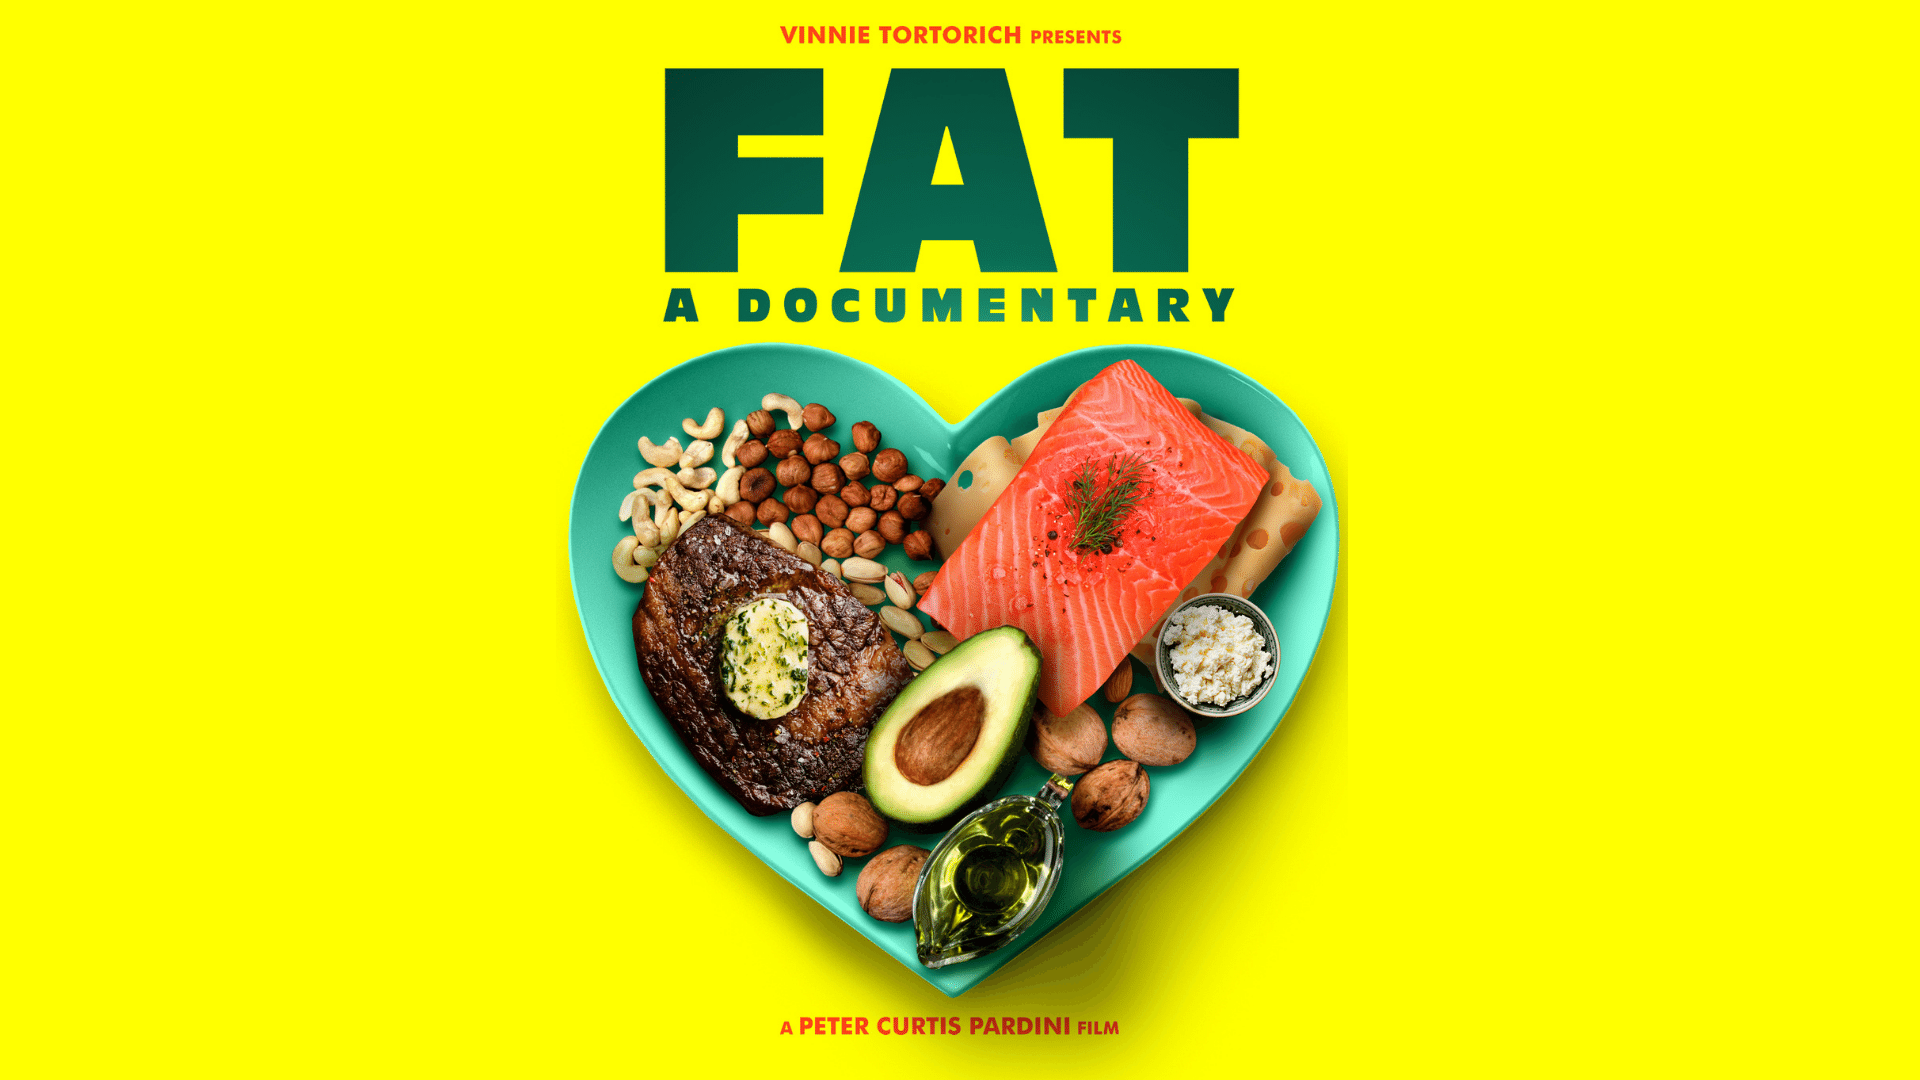 FAT A DOCUMENTARY